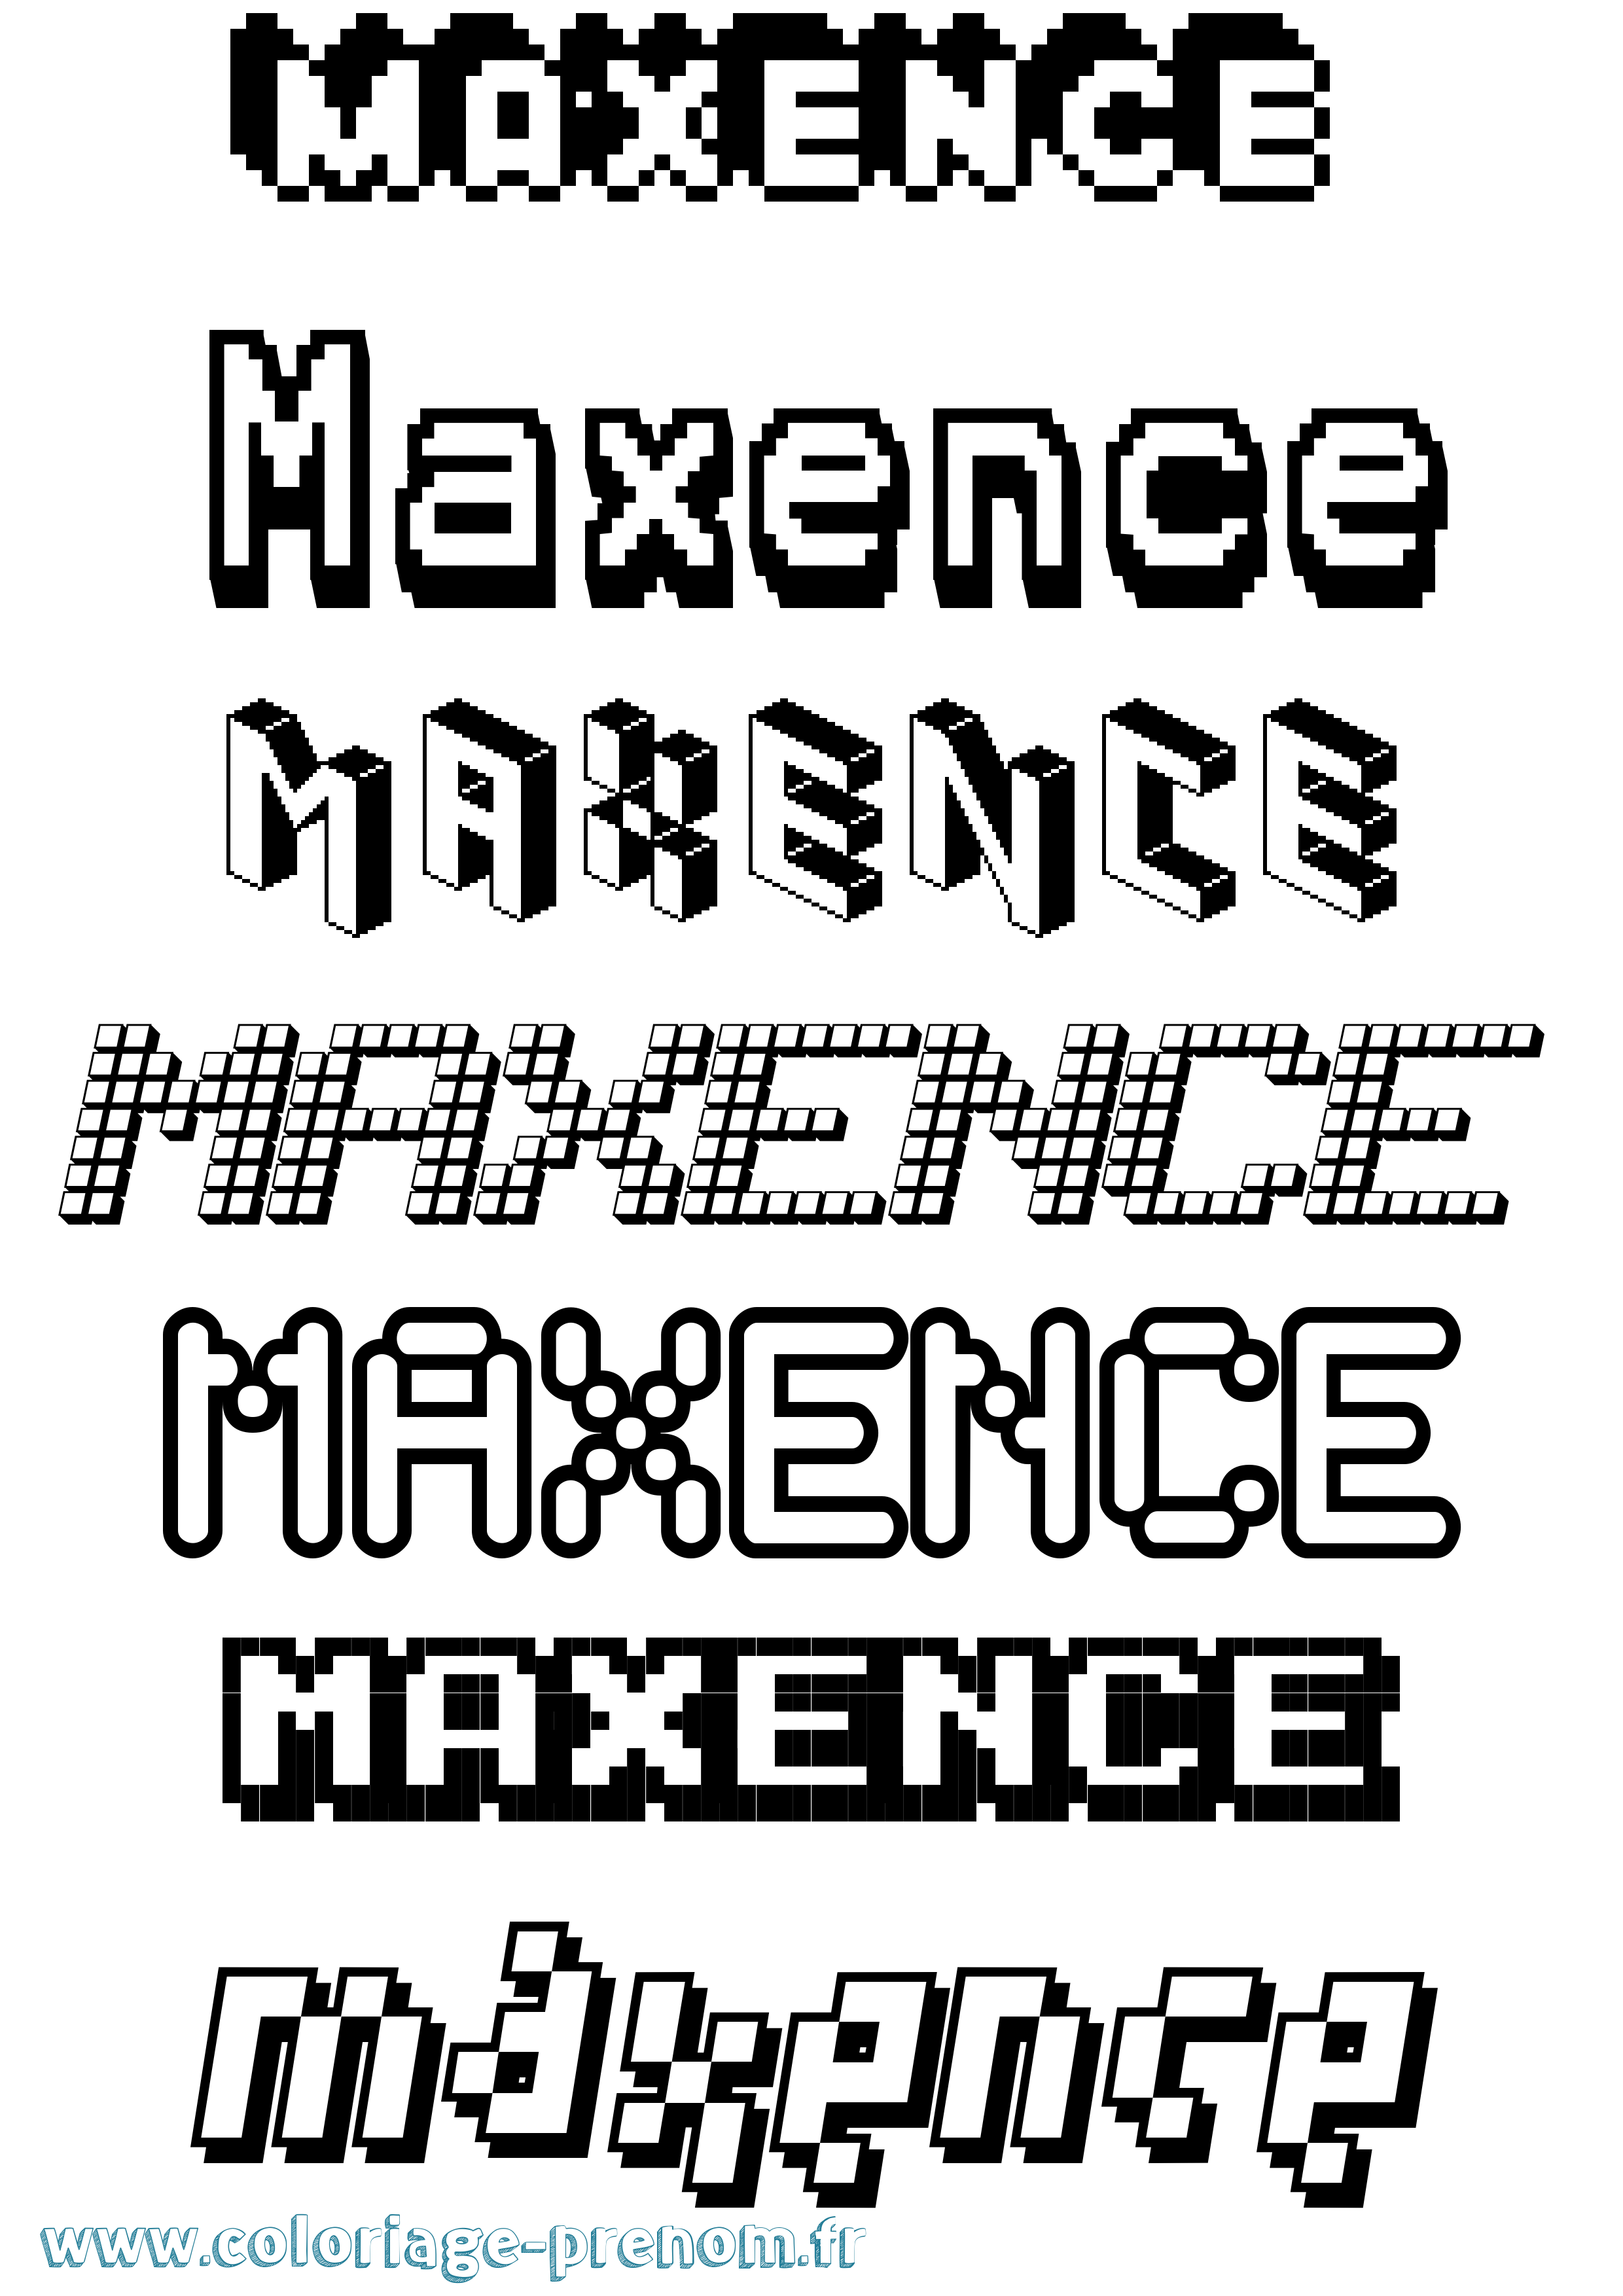 Coloriage prénom Maxence Pixel